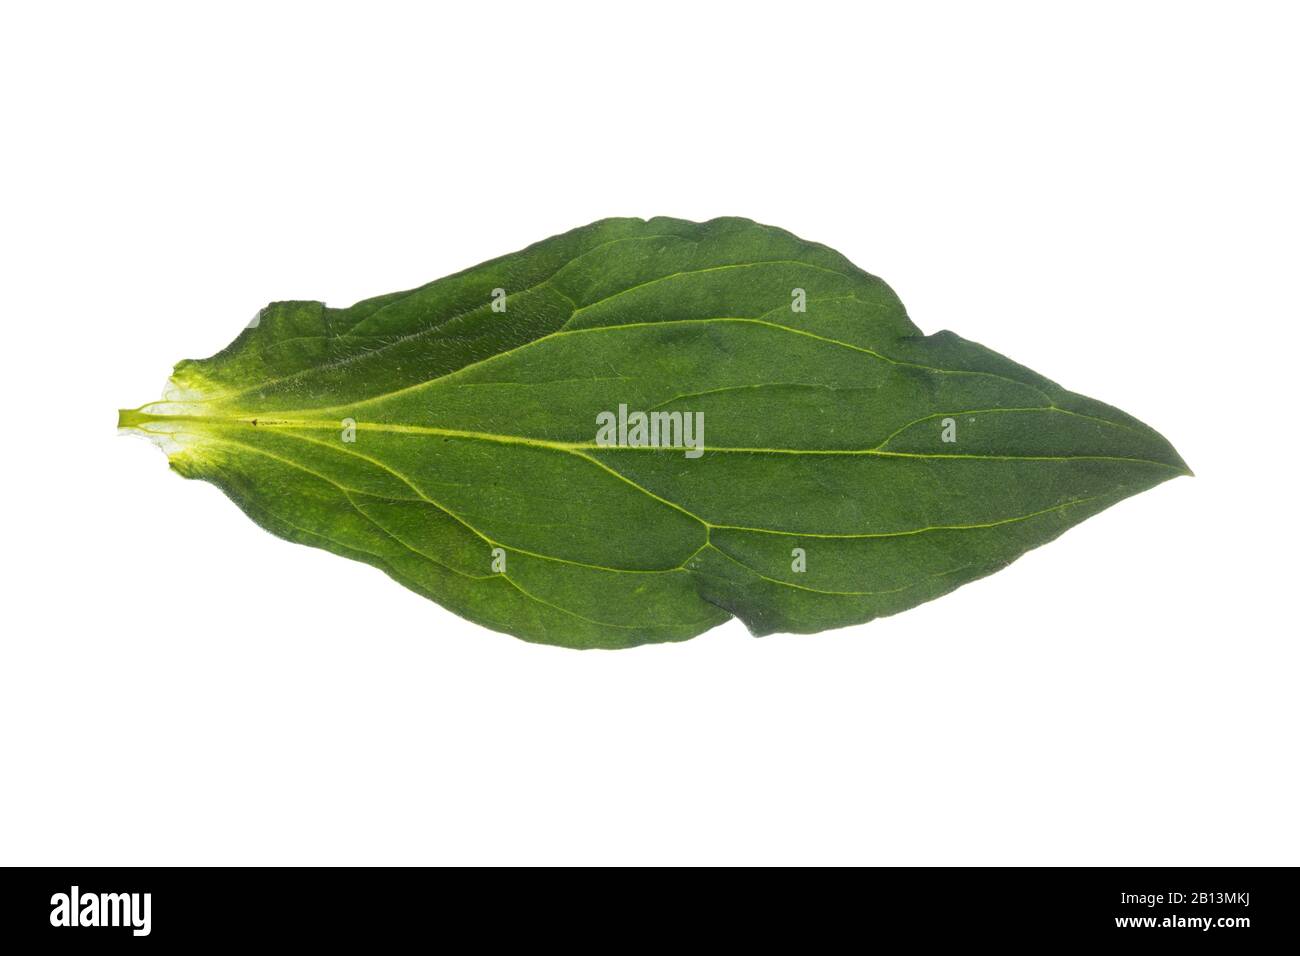 bladder campion, maiden's tears (Silene vulgaris), leaf, cutout, Germany Stock Photo